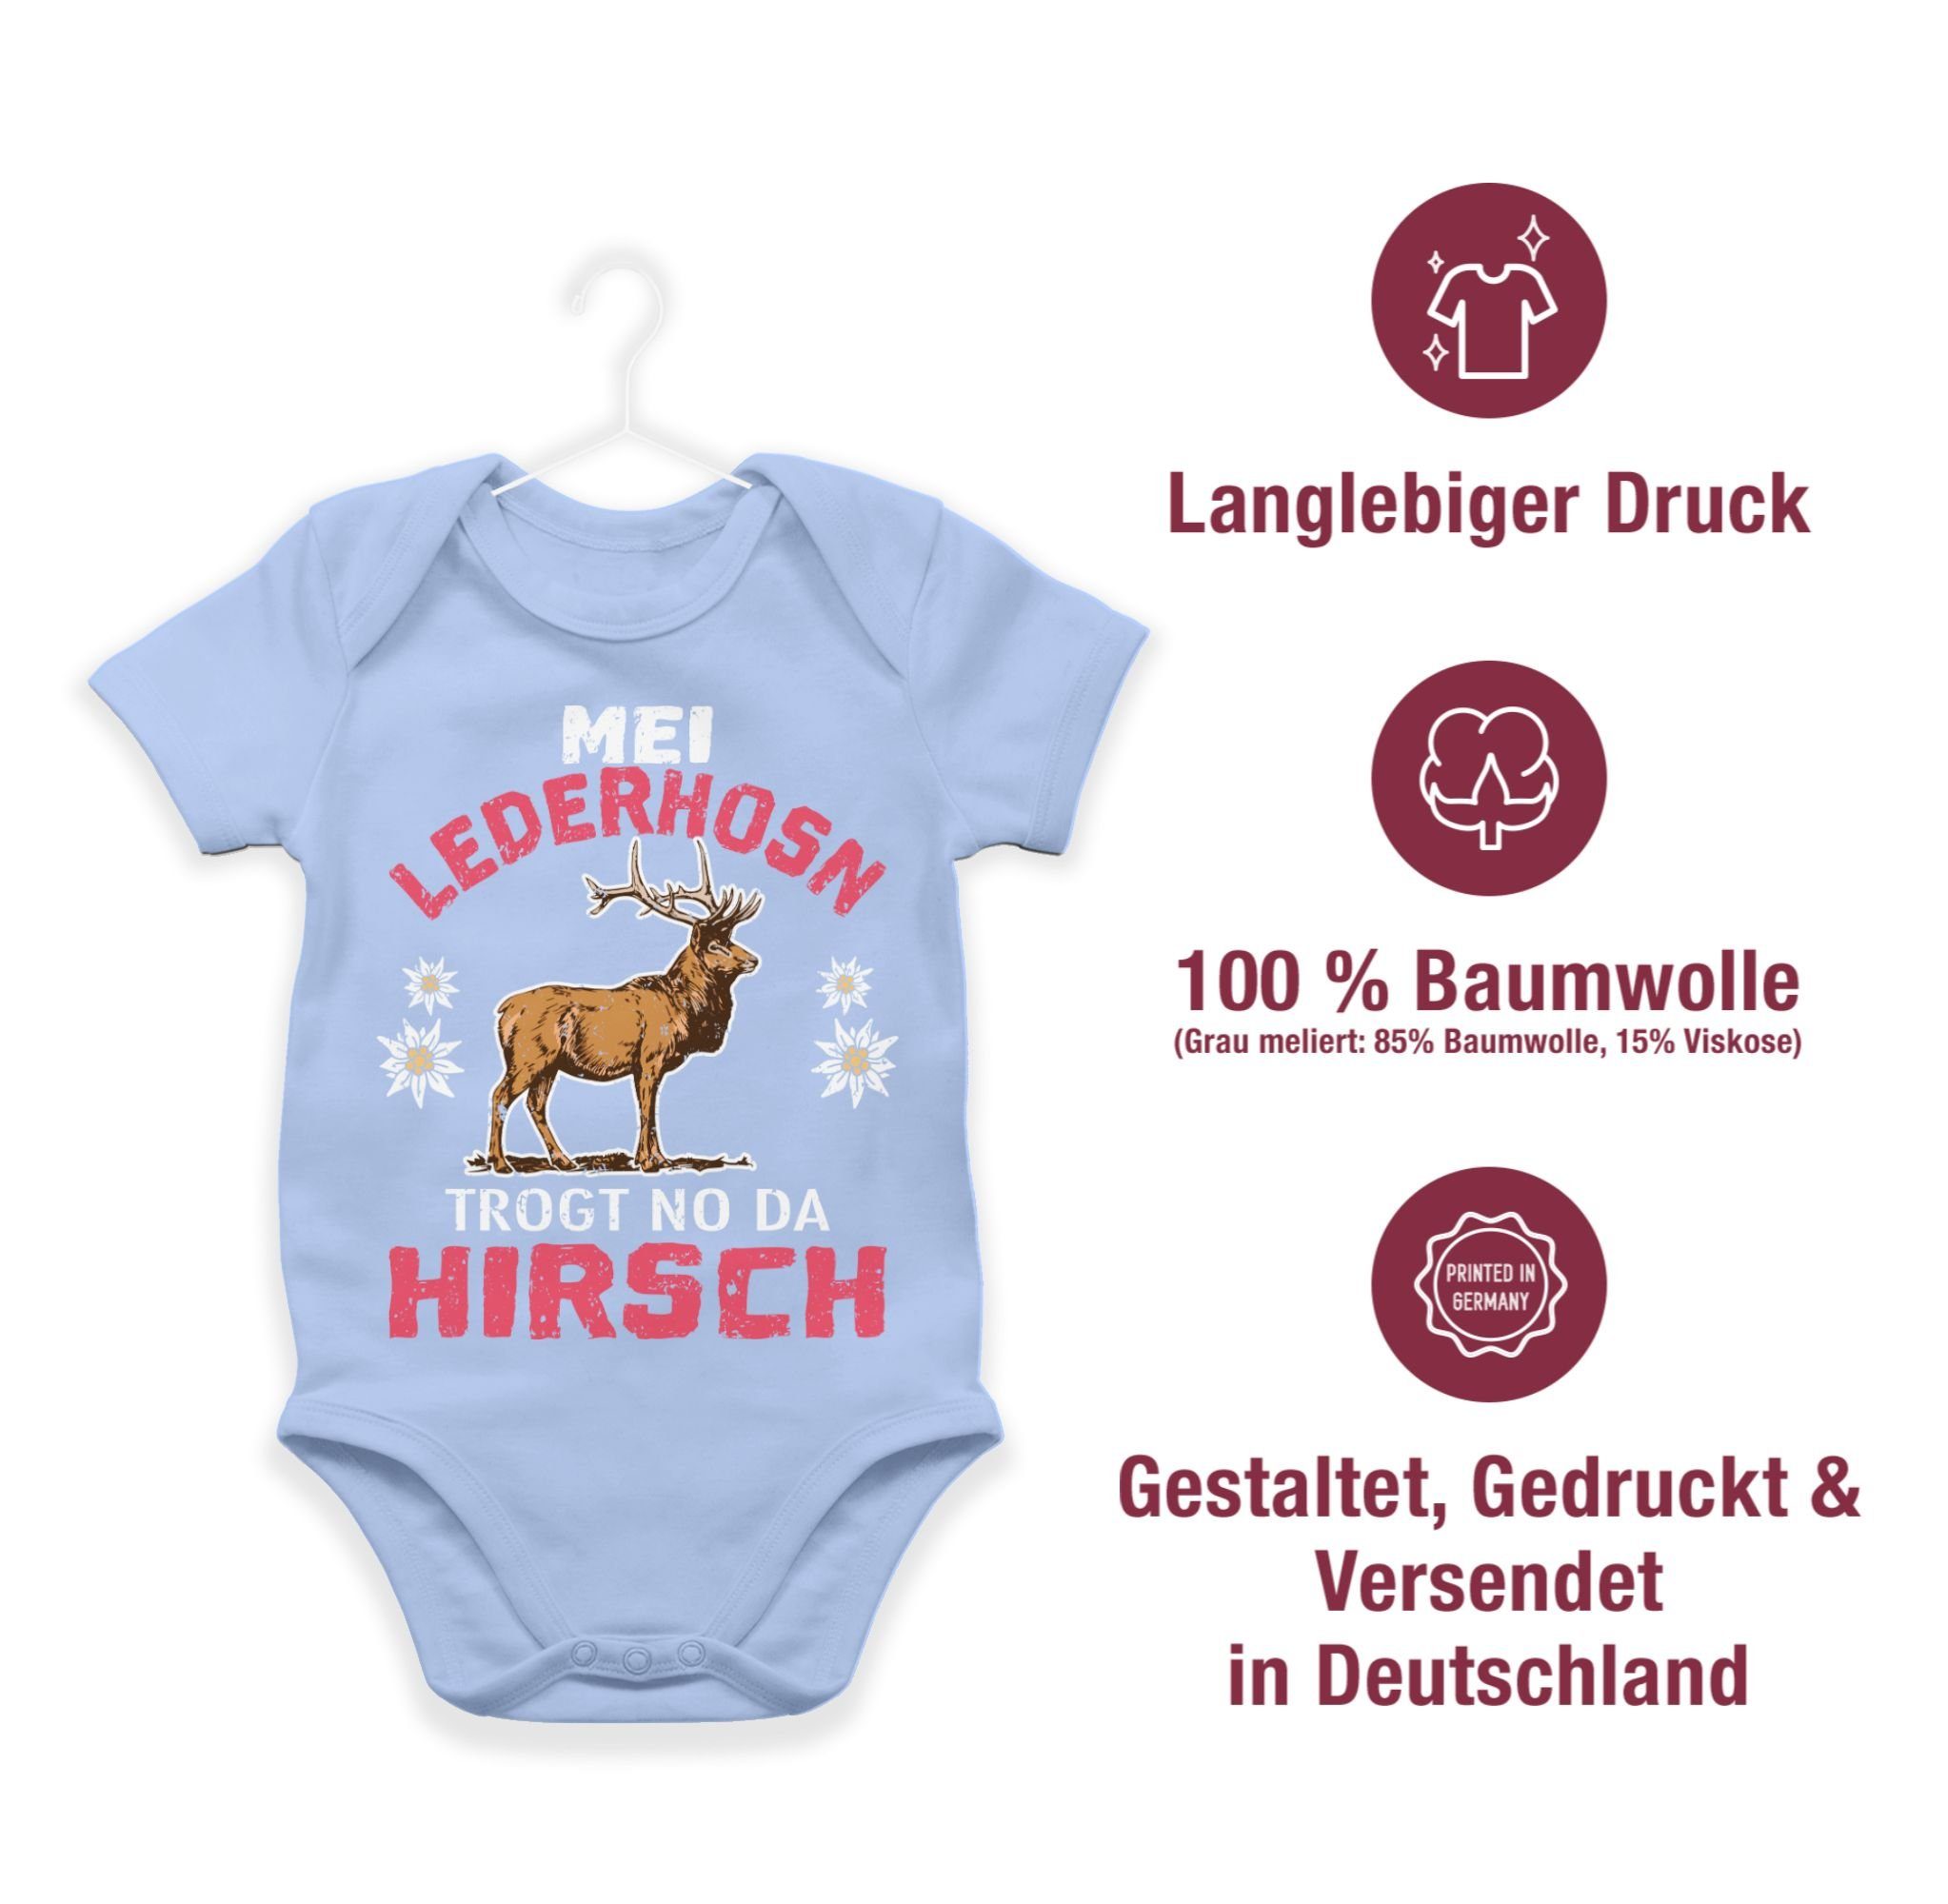 Hirsch Outfit trogt Babyblau da no für Shirtracer Oktoberfest - 3 Mode Mei Shirtbody weiß/rot Lederhosn Baby